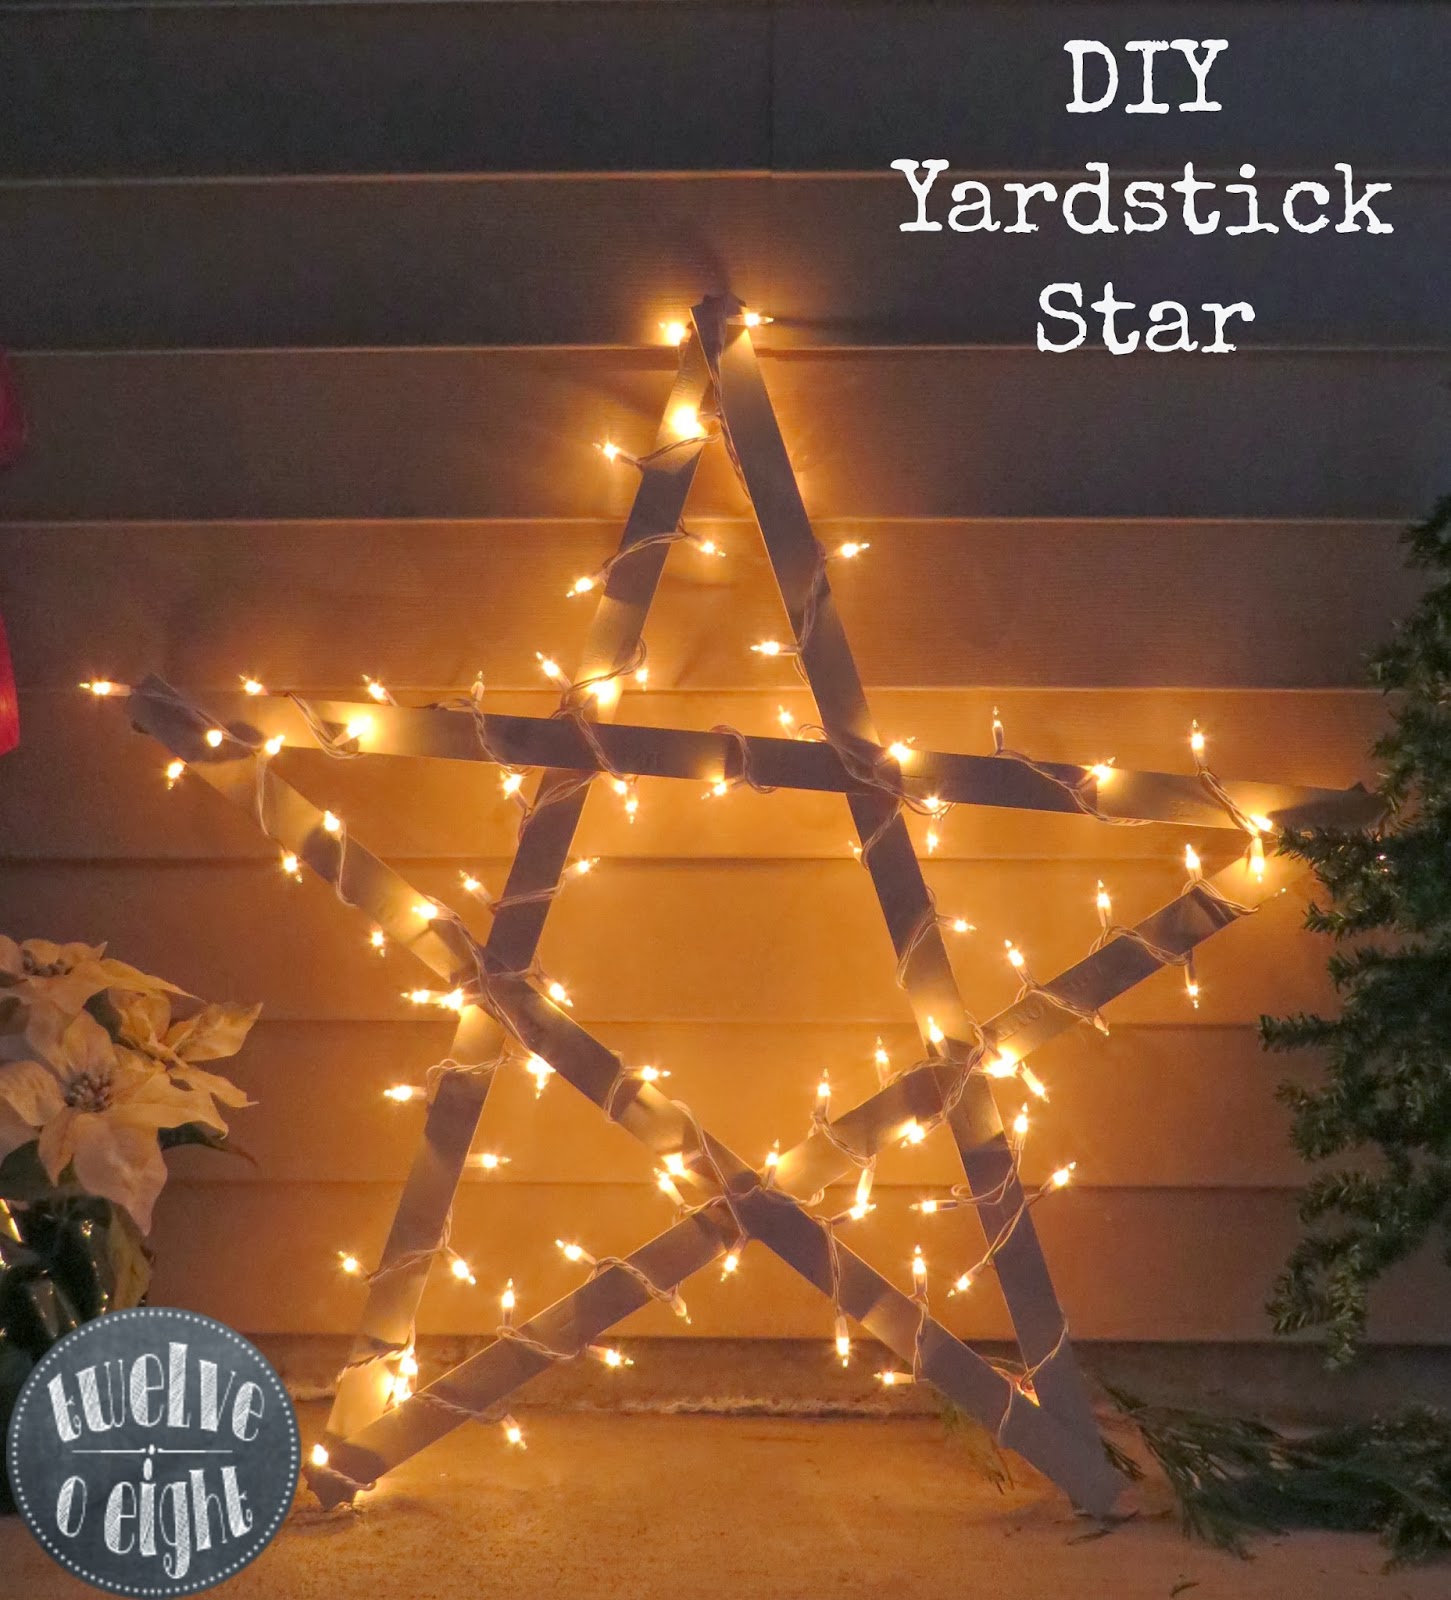 DIY Yardstick Star